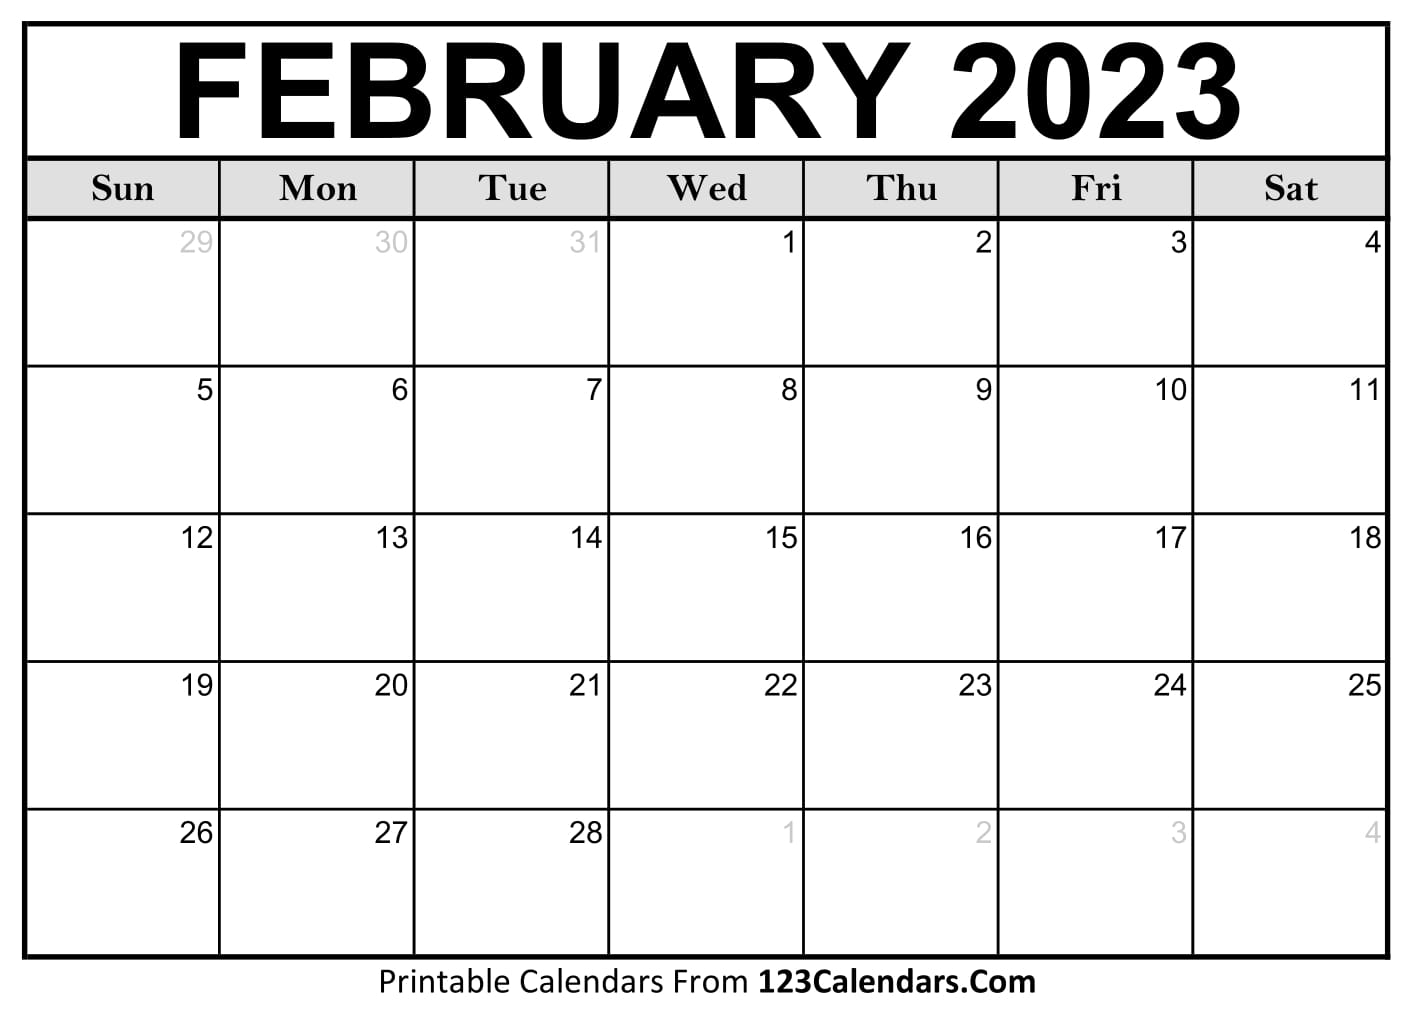 2023 February Calendar